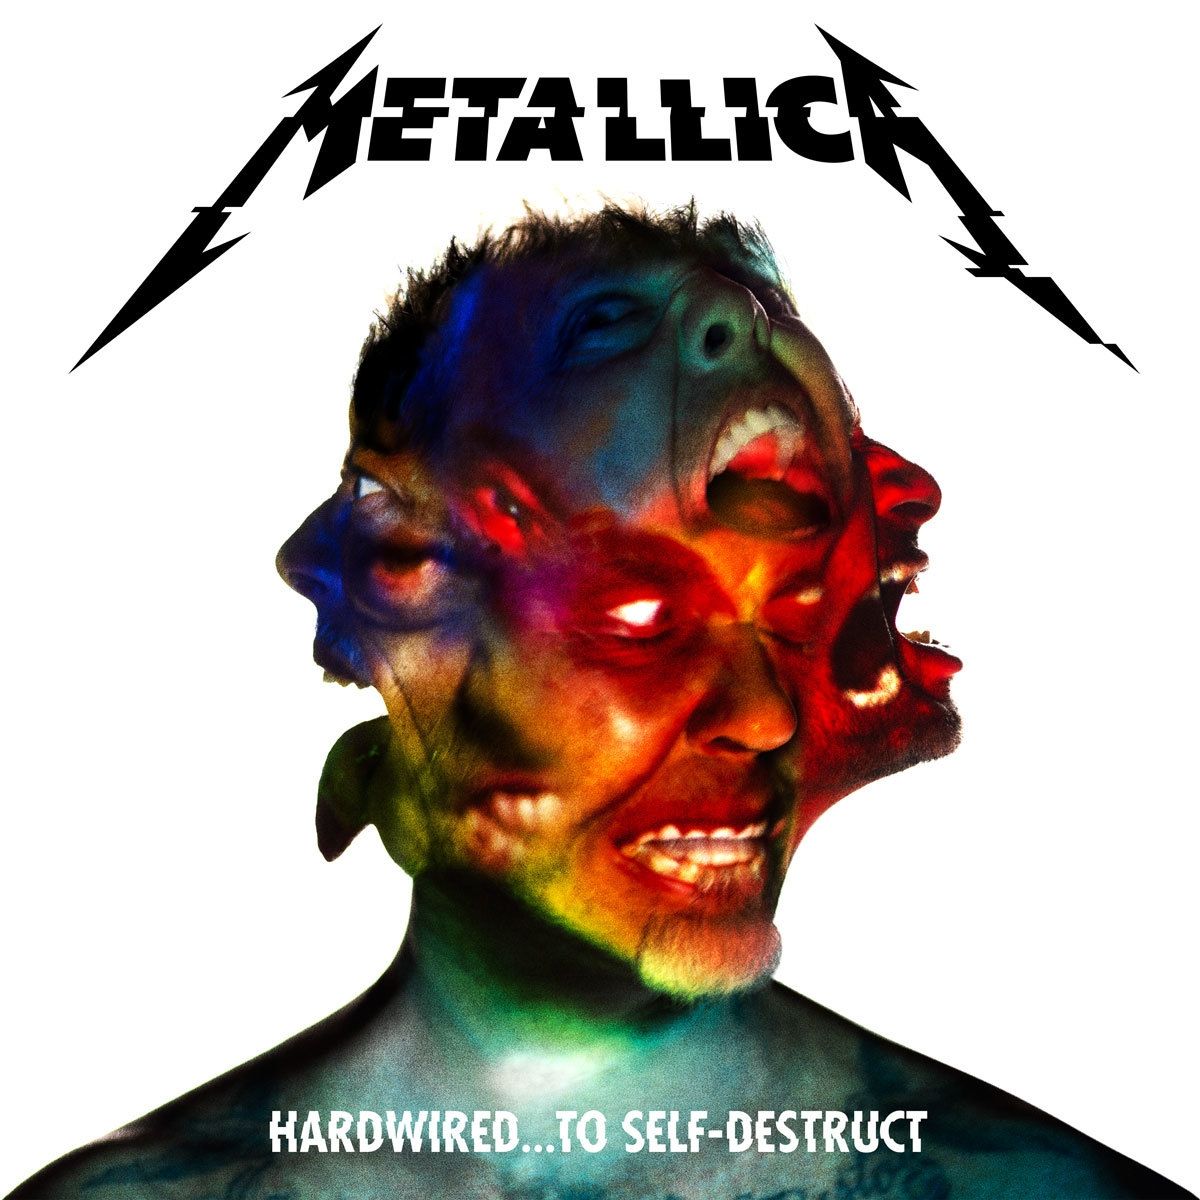 Imagem do álbum Hardwired... to Self-Destruct do(a) artista Metallica